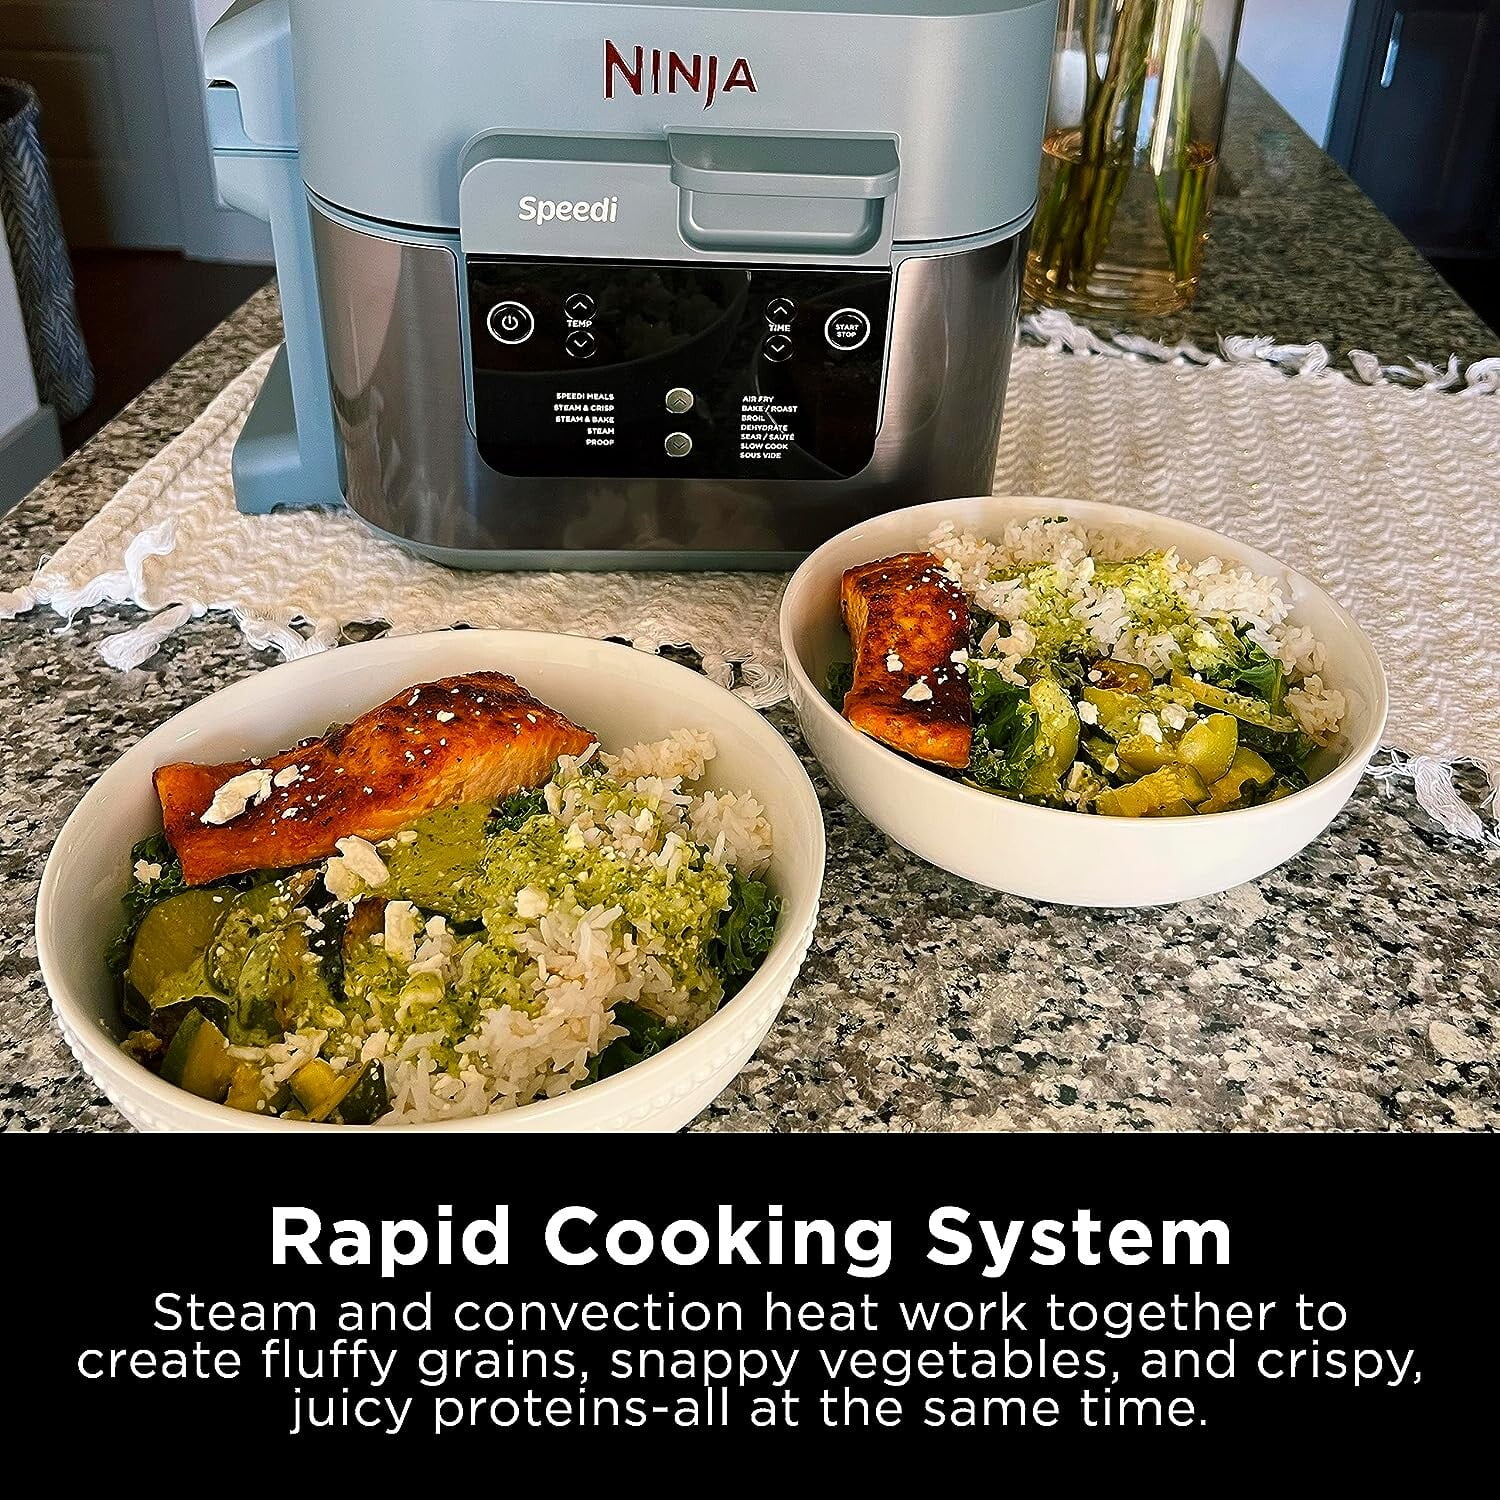 Ninja Speedi Rapid Cooker & Air Fryer 302A 6-Qt Capacity 11-in-1 Damaged  Box